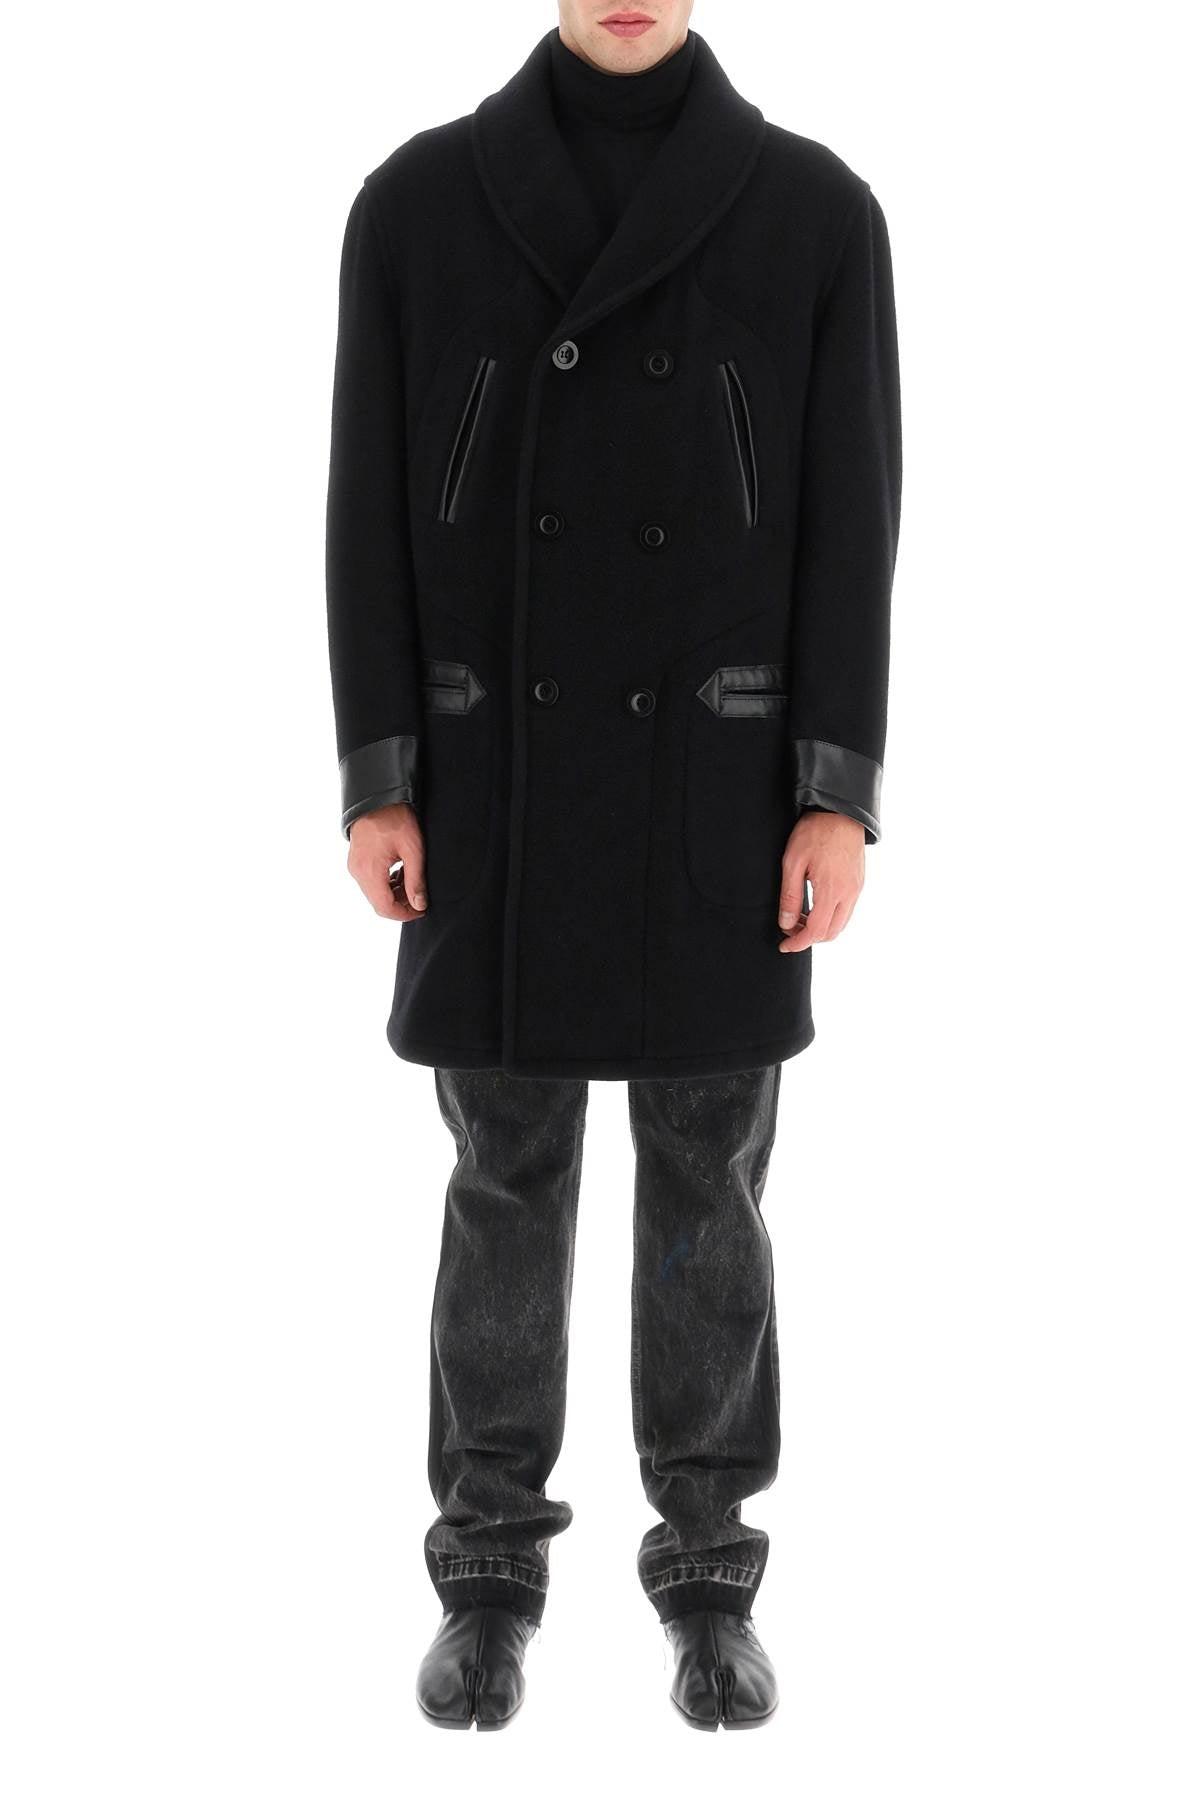 Maison Margiela Double-breasted Wool Coat in Black for Men | Lyst